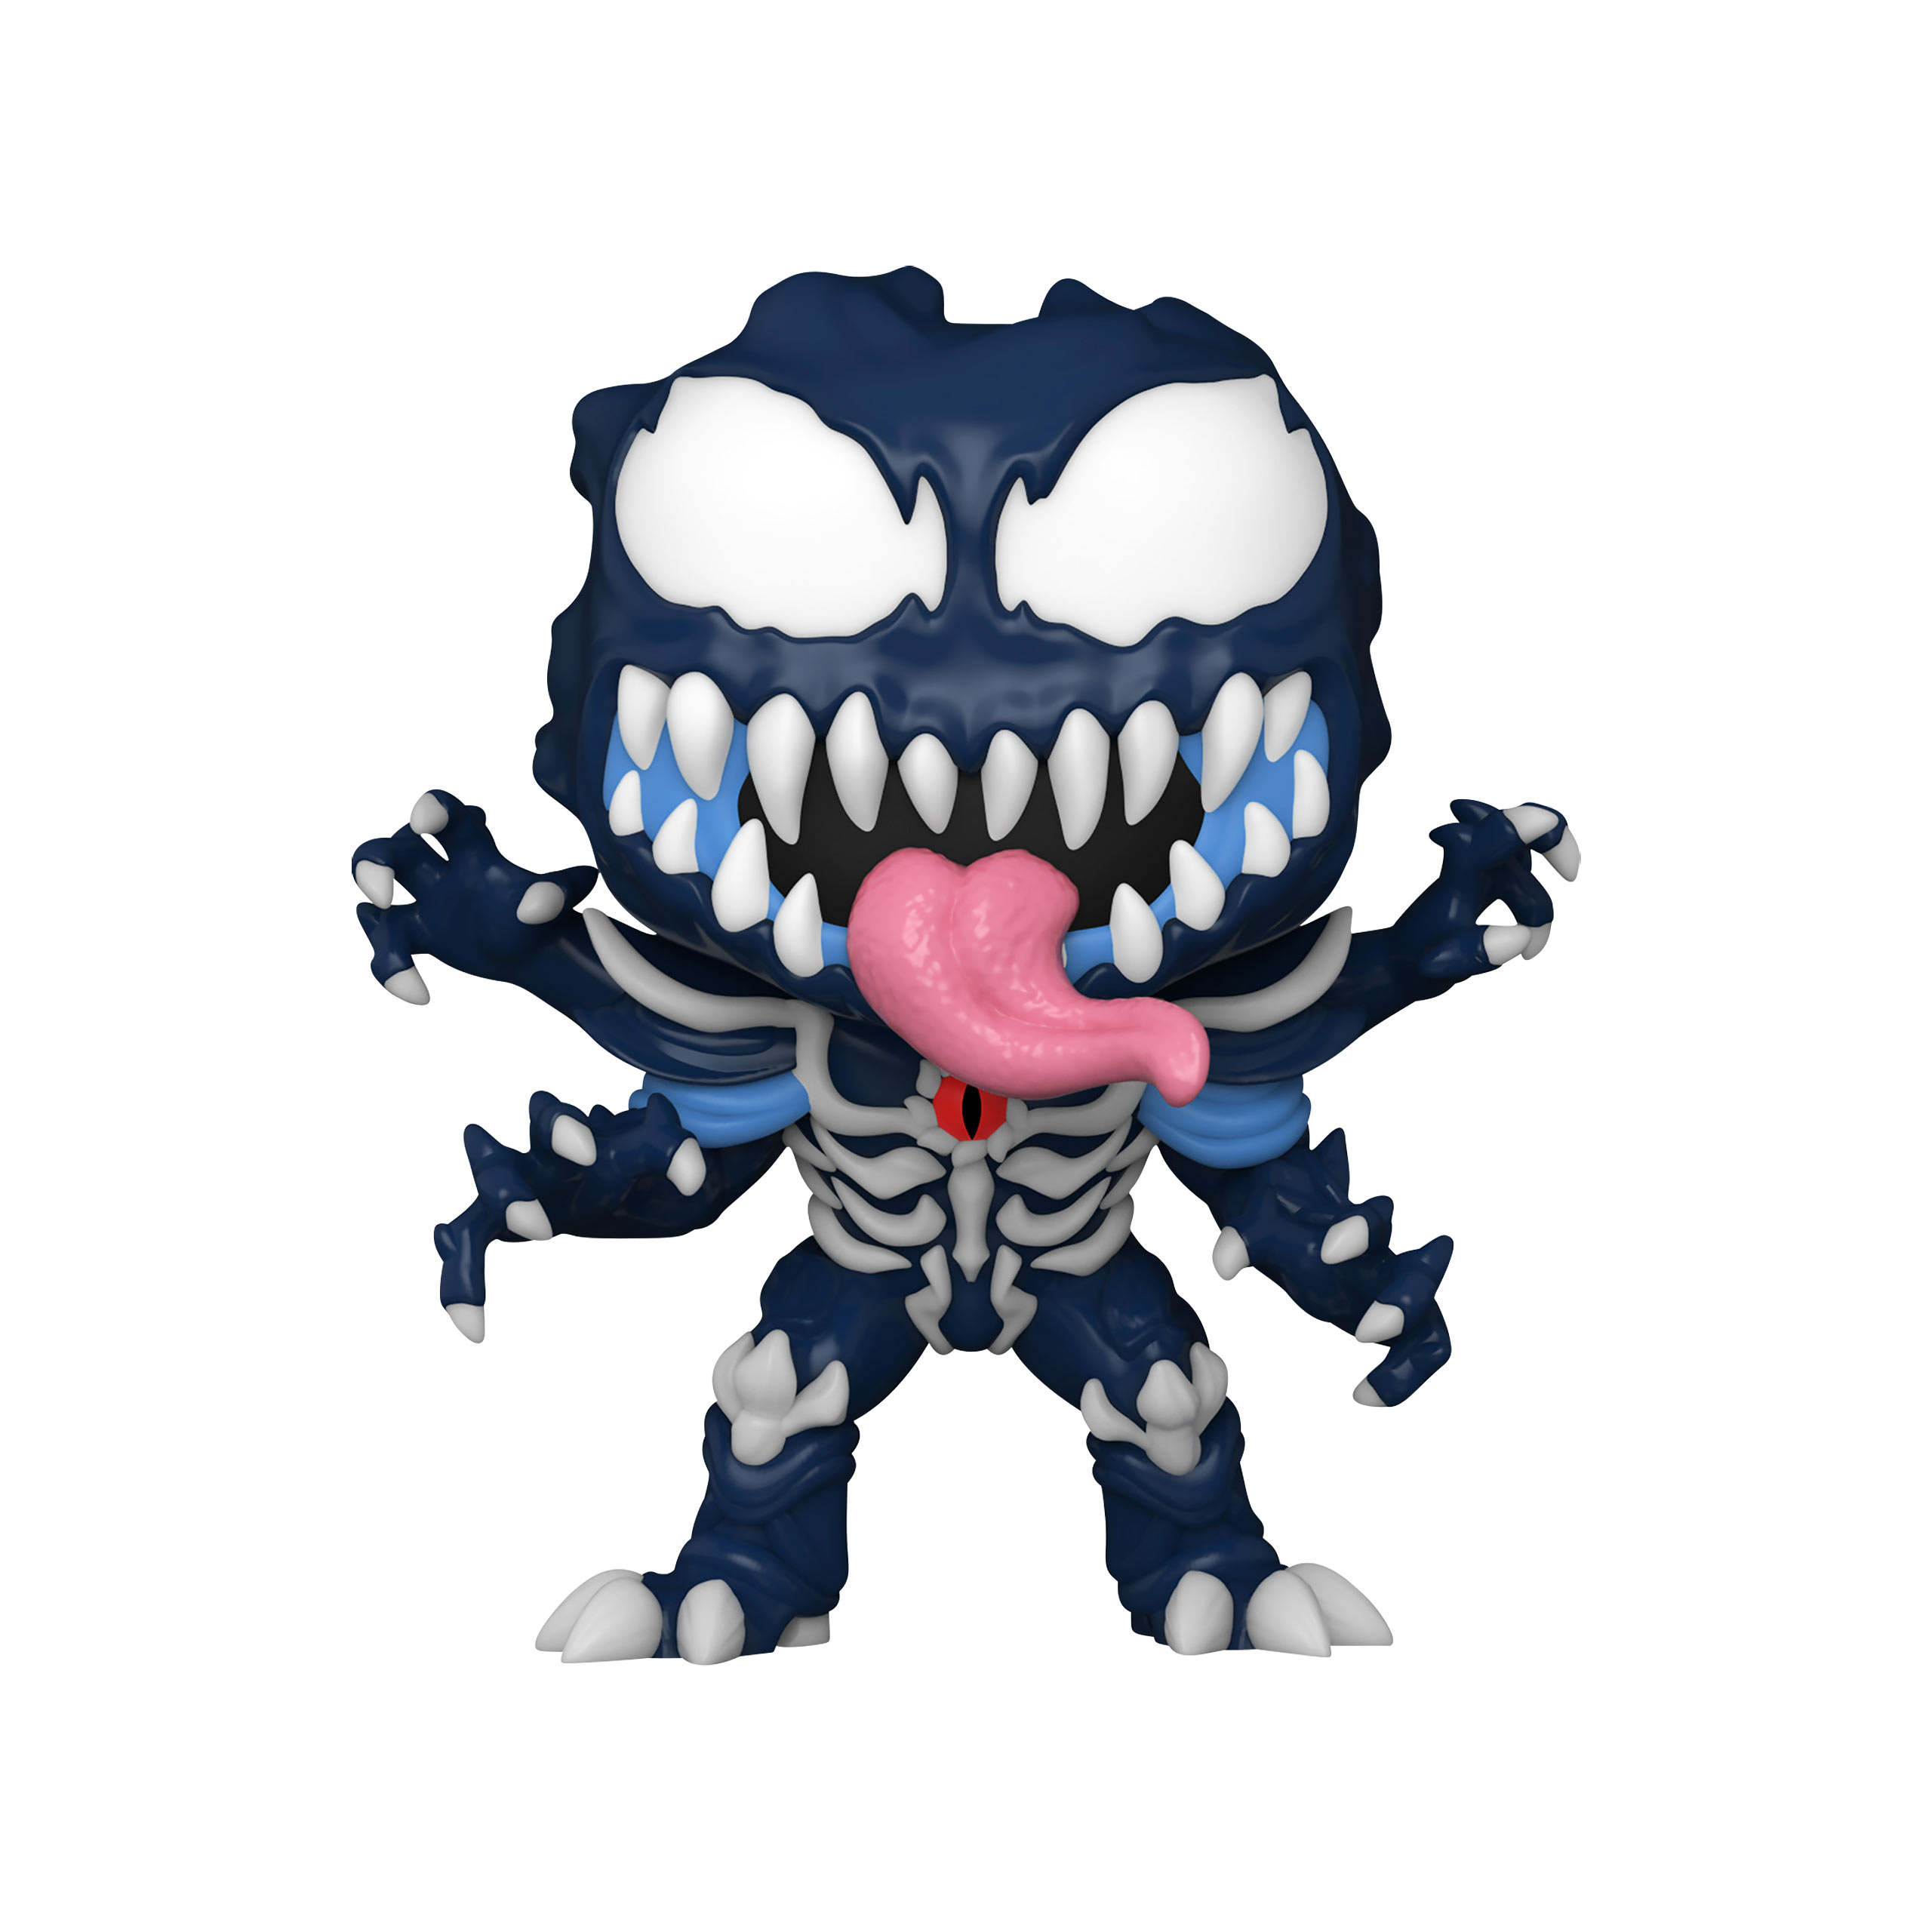 Monster Hunters - Venom Funko Pop Wackelkopf-Figur